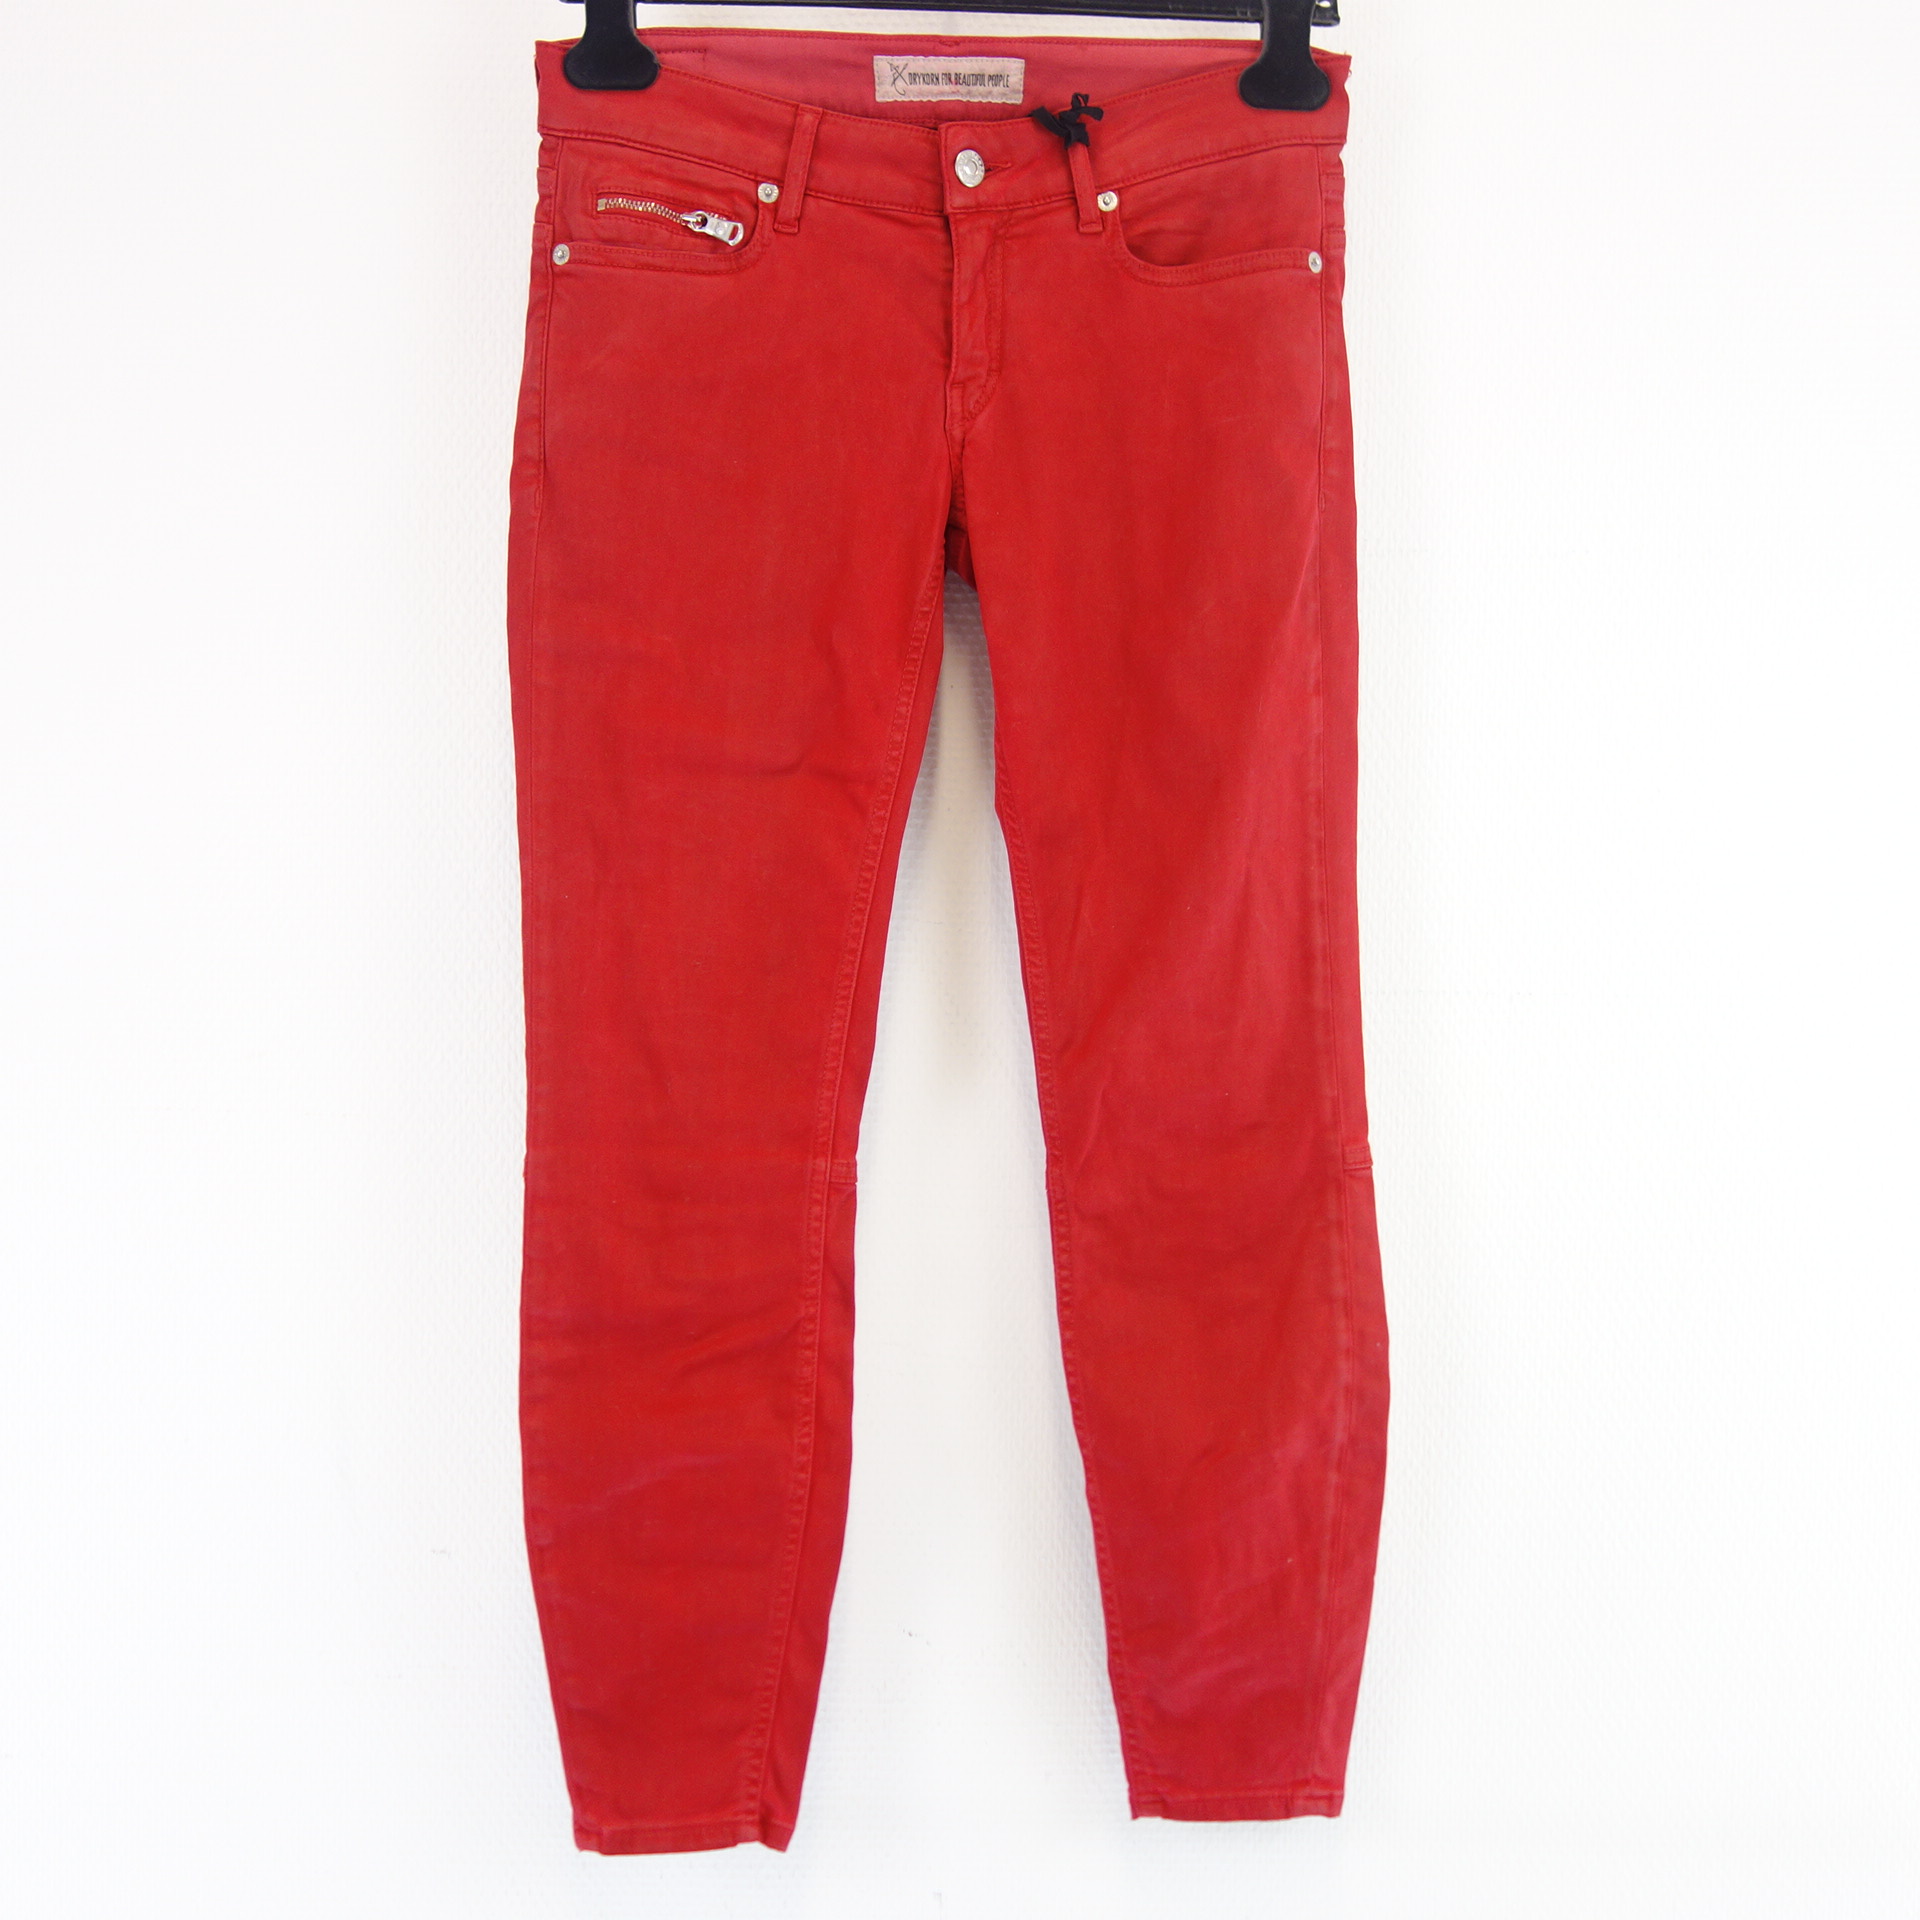 DRYKORN Damen Jeans Hose Jeanshose Rot PUNKY WILD Crop 27 ( 26 )